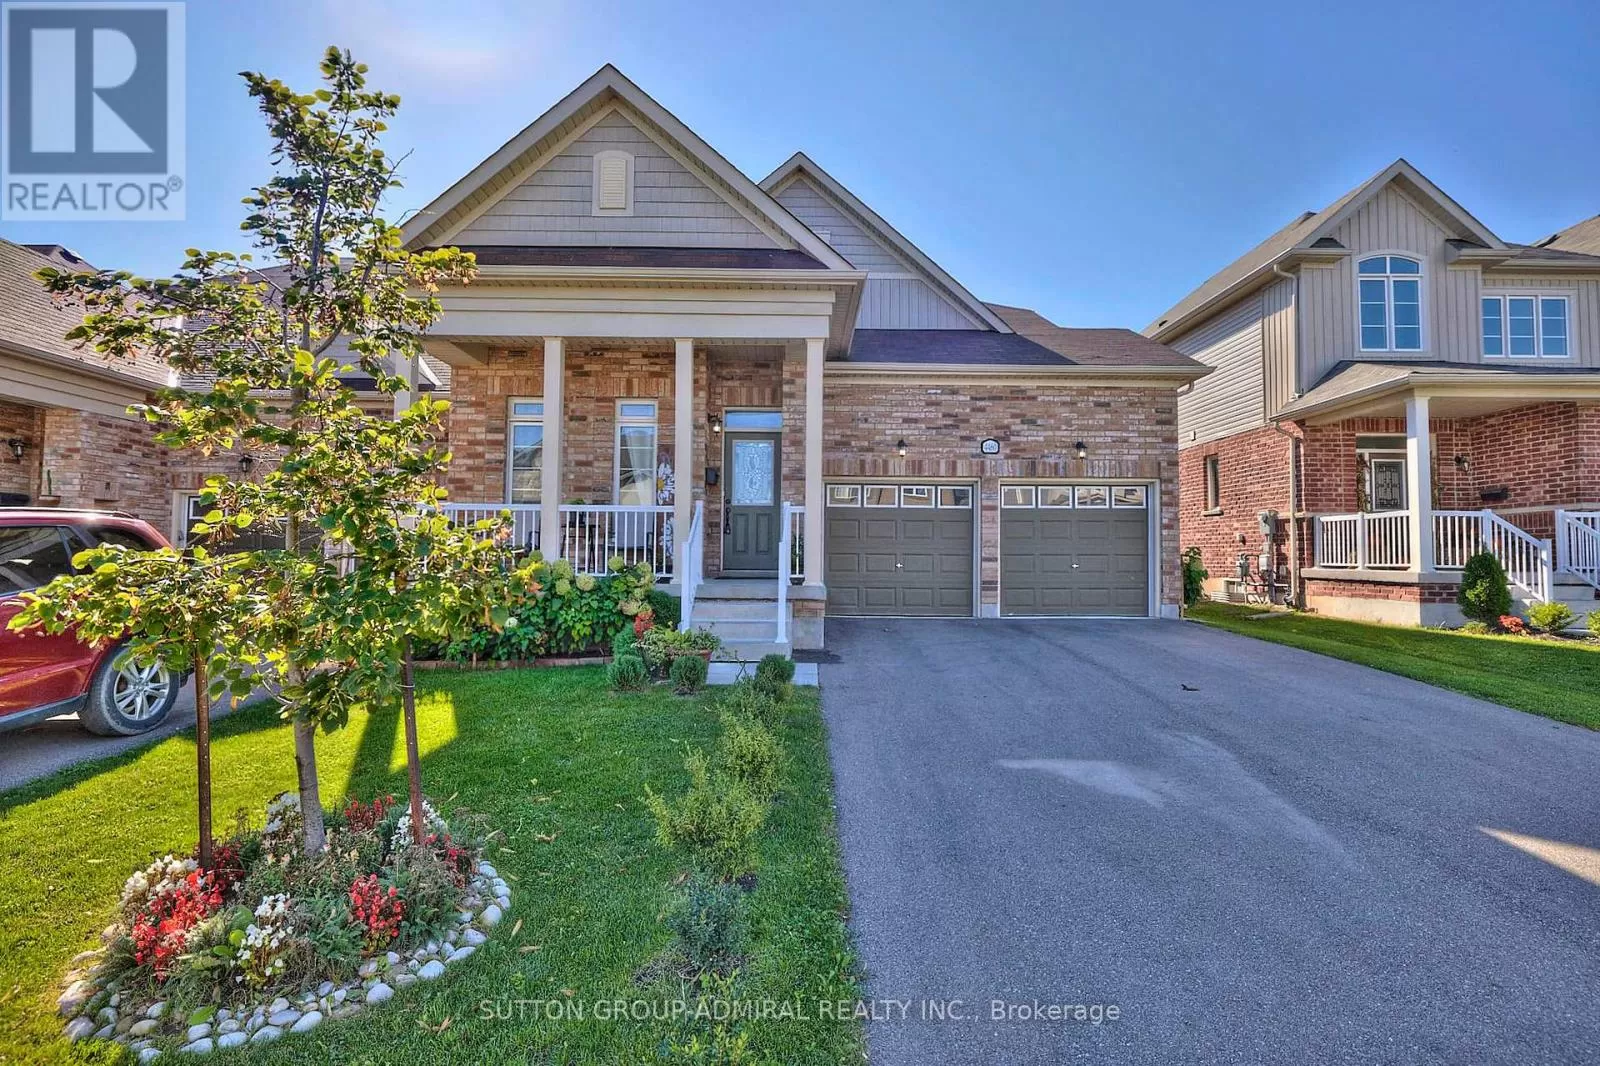 House for rent: 4460 Eclipse Way, Niagara Falls, Ontario L2G 0X4